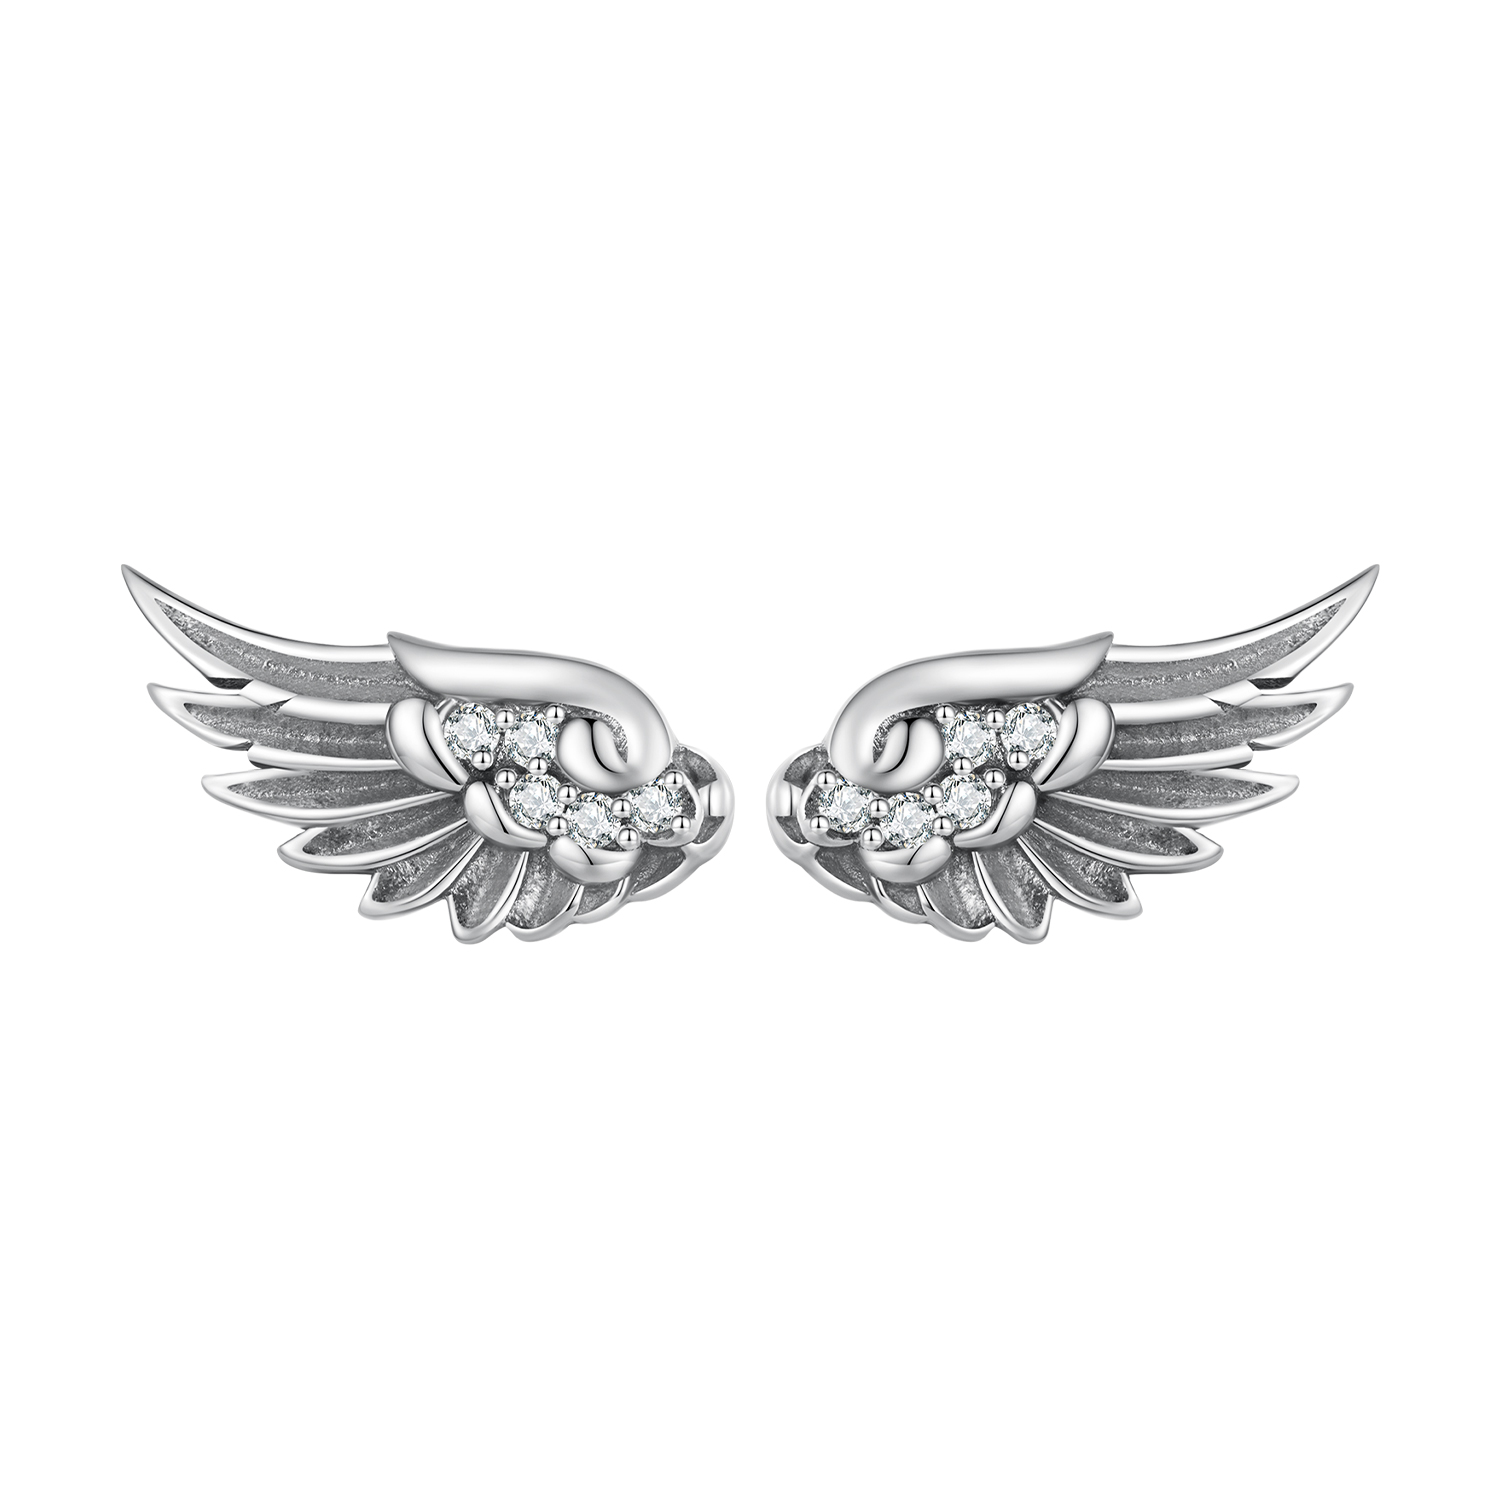 pandora style angel wings studs earrings sce1579